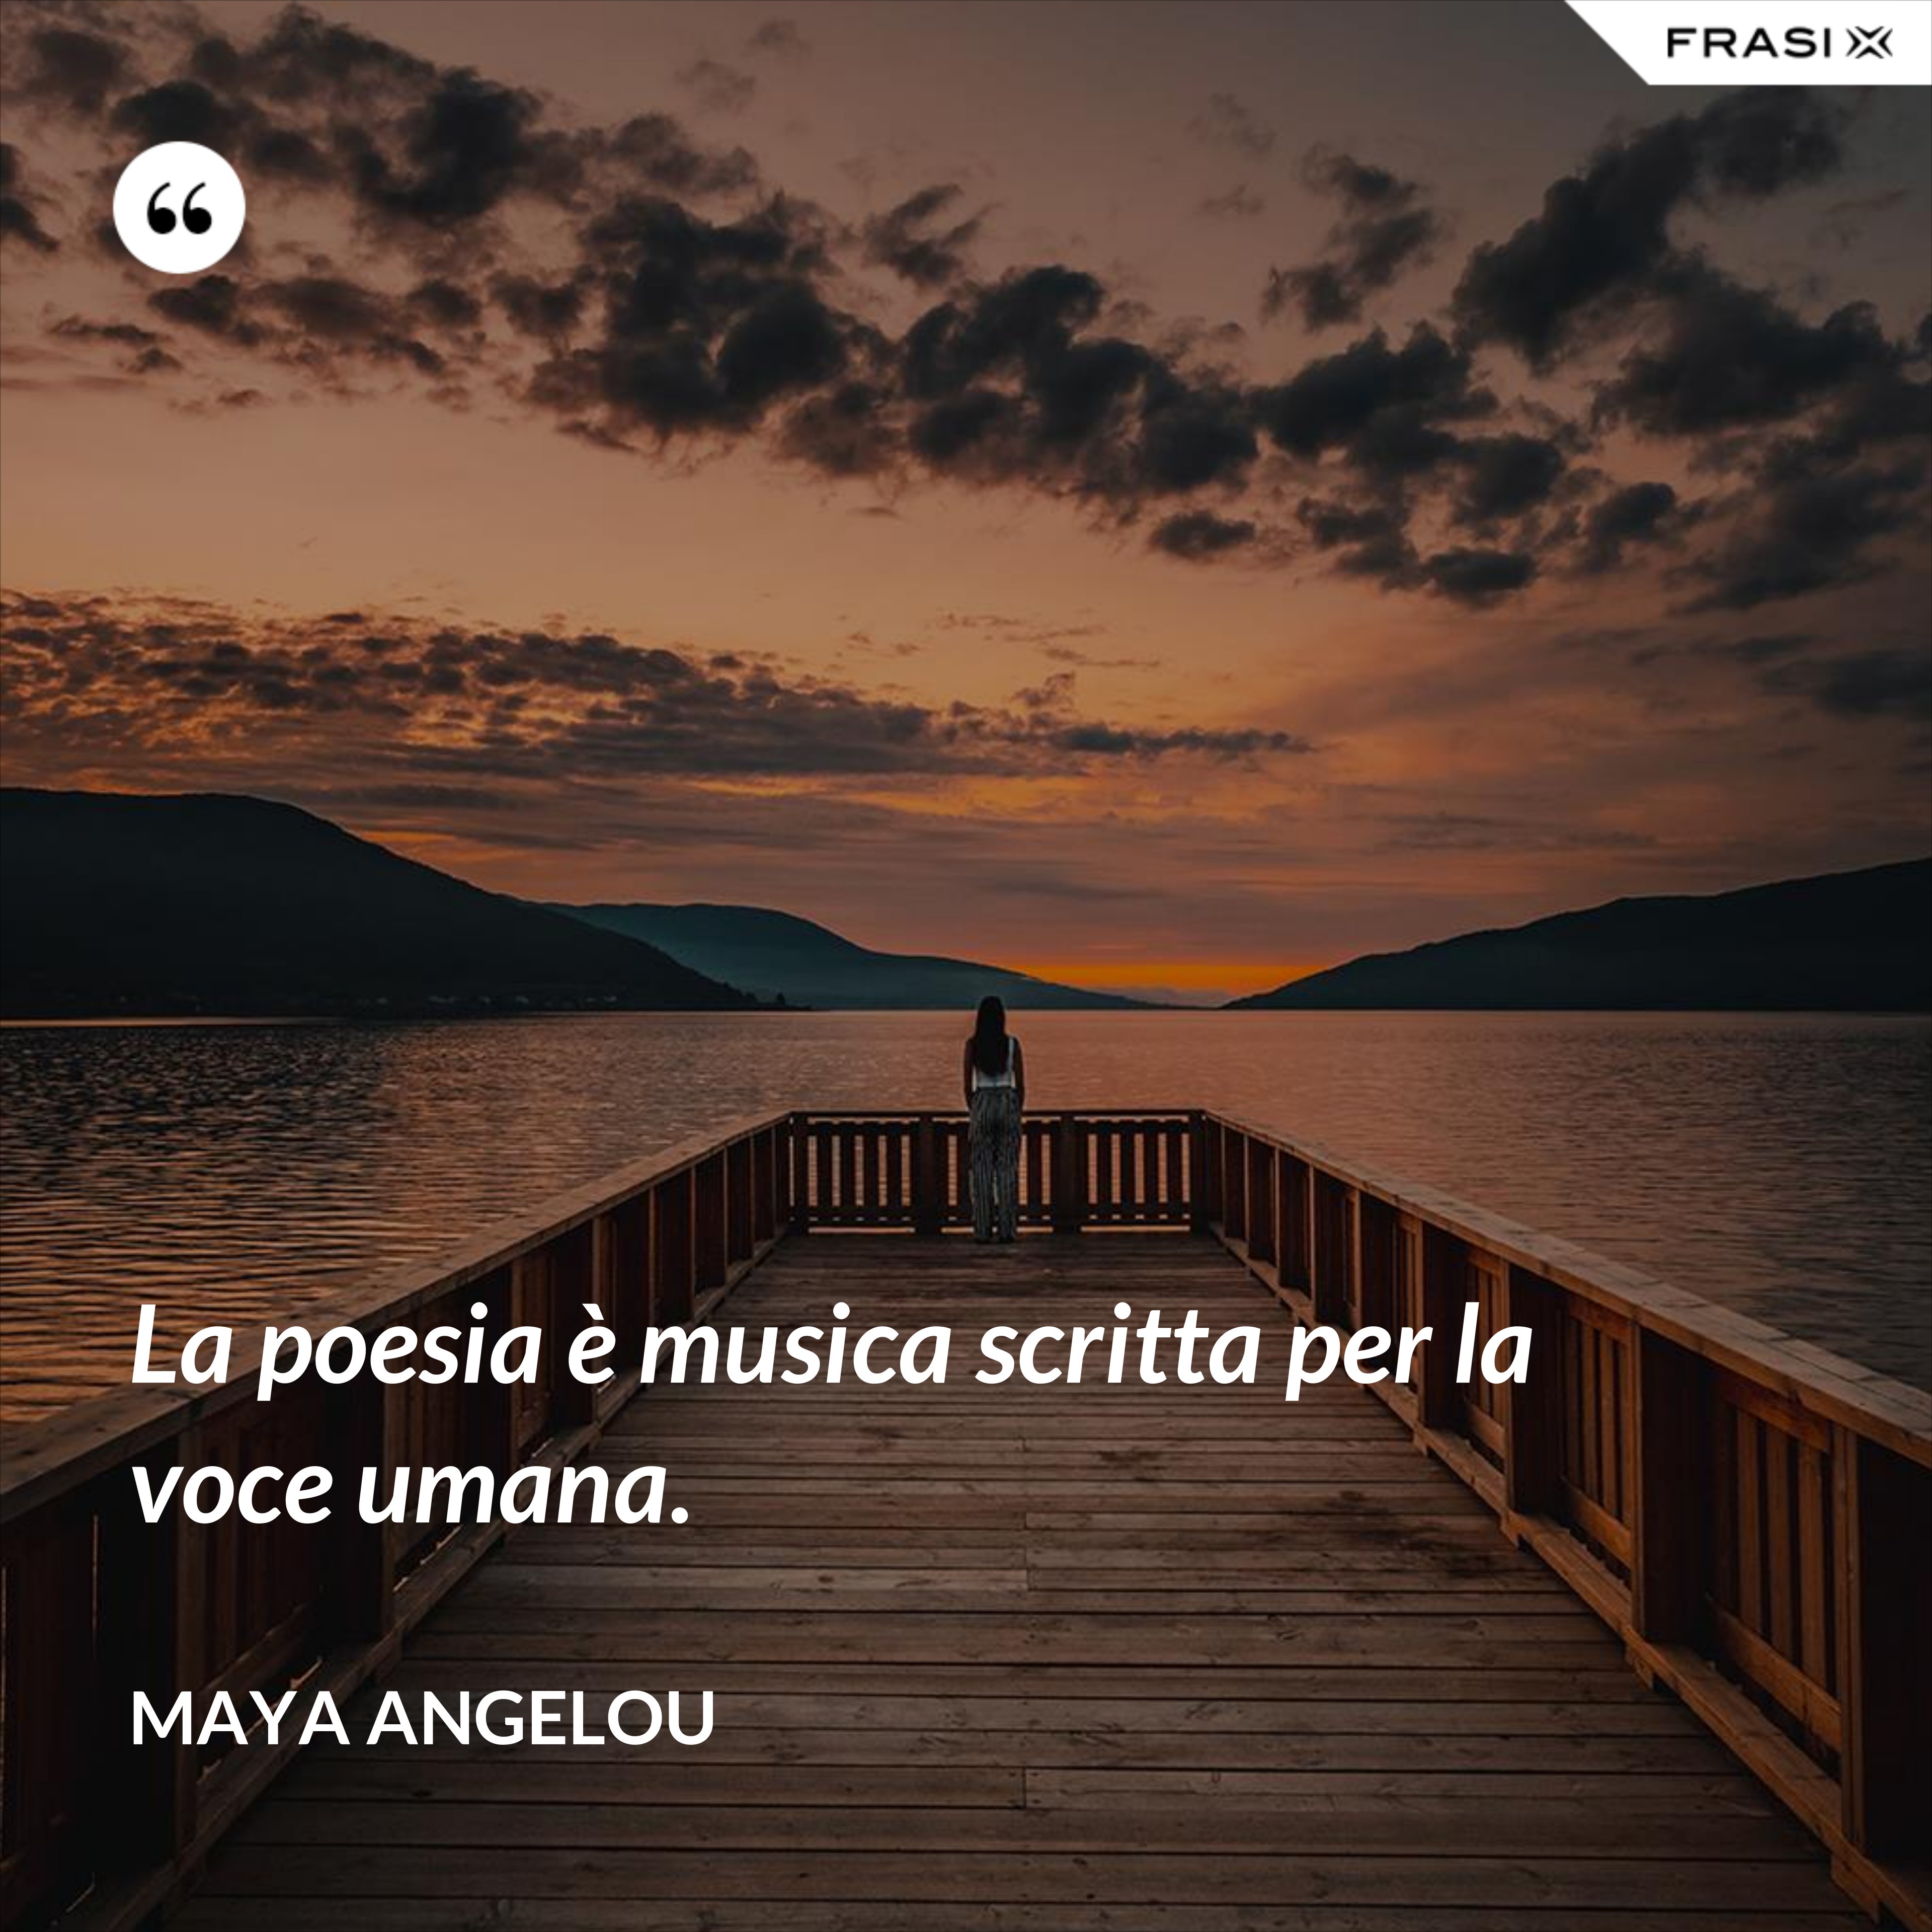 La poesia è musica scritta per la voce umana. - Maya Angelou